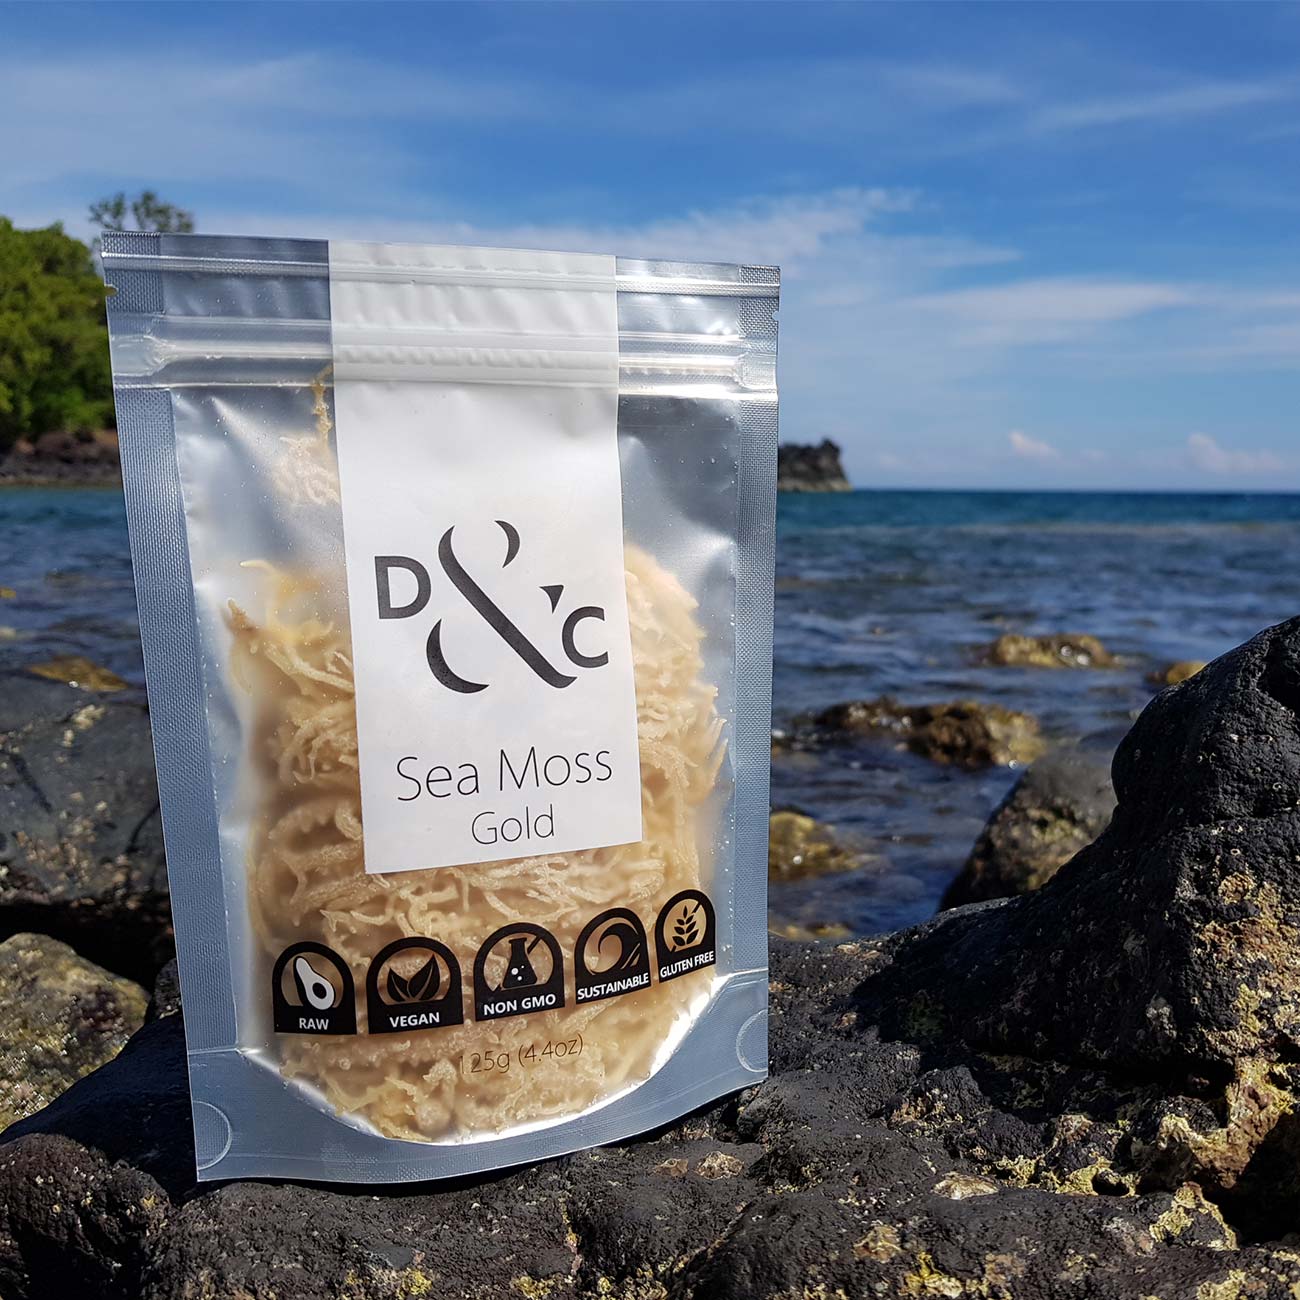 sea moss 125g bag photographed on a rocky sunny beach